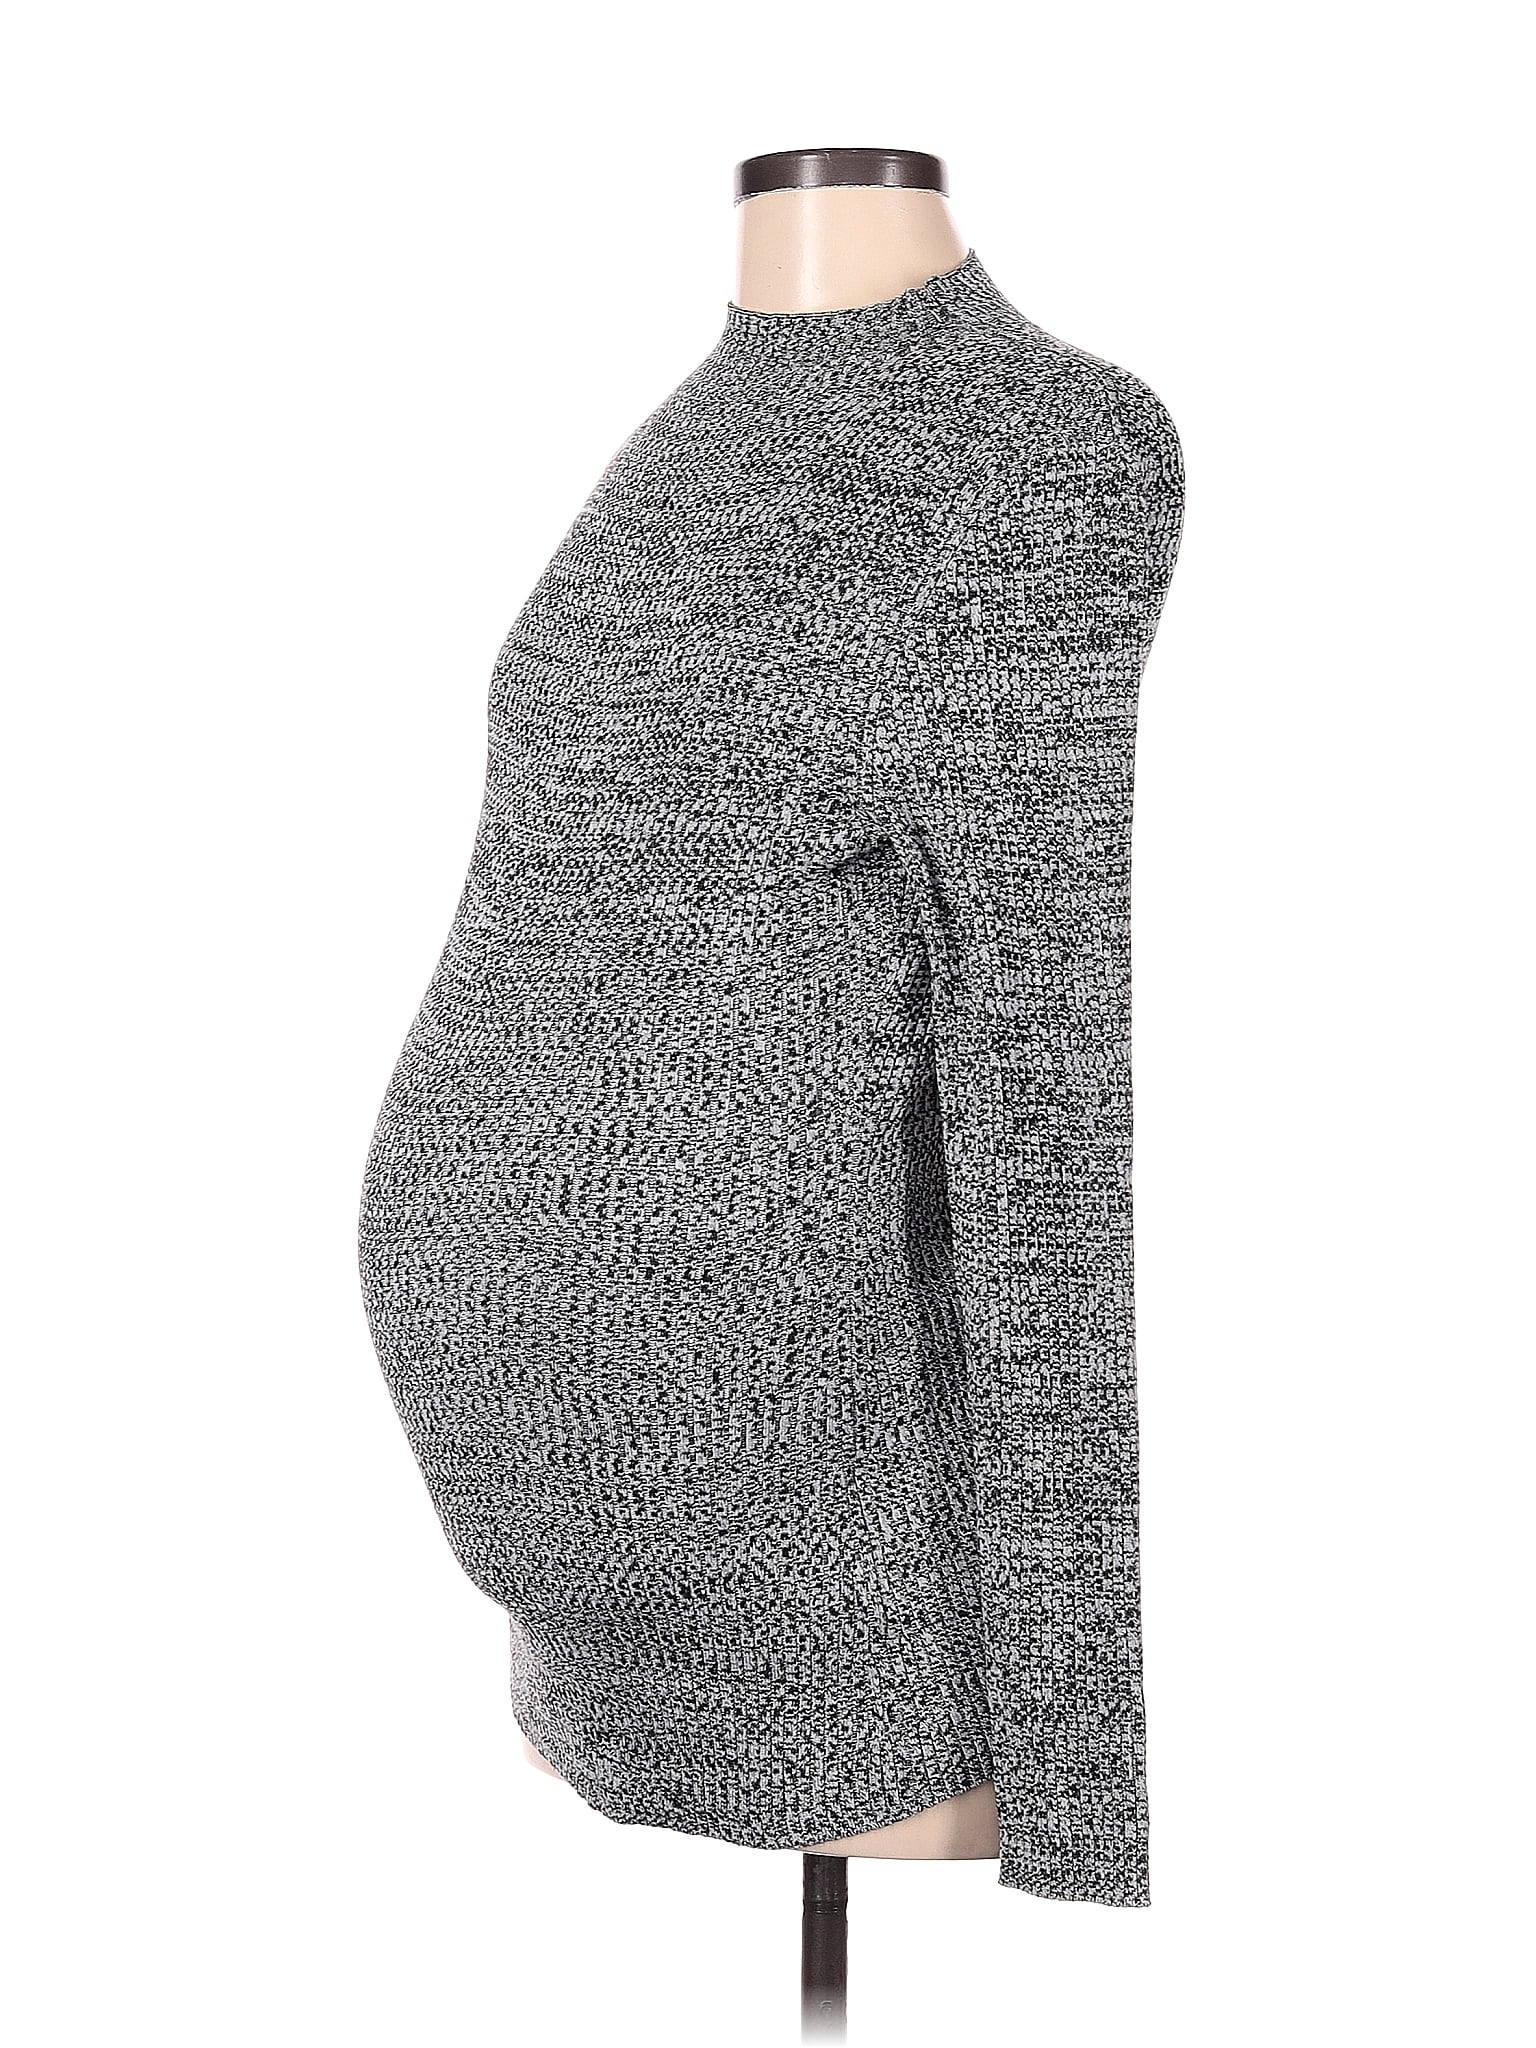 MAMA Turtleneck Sweater